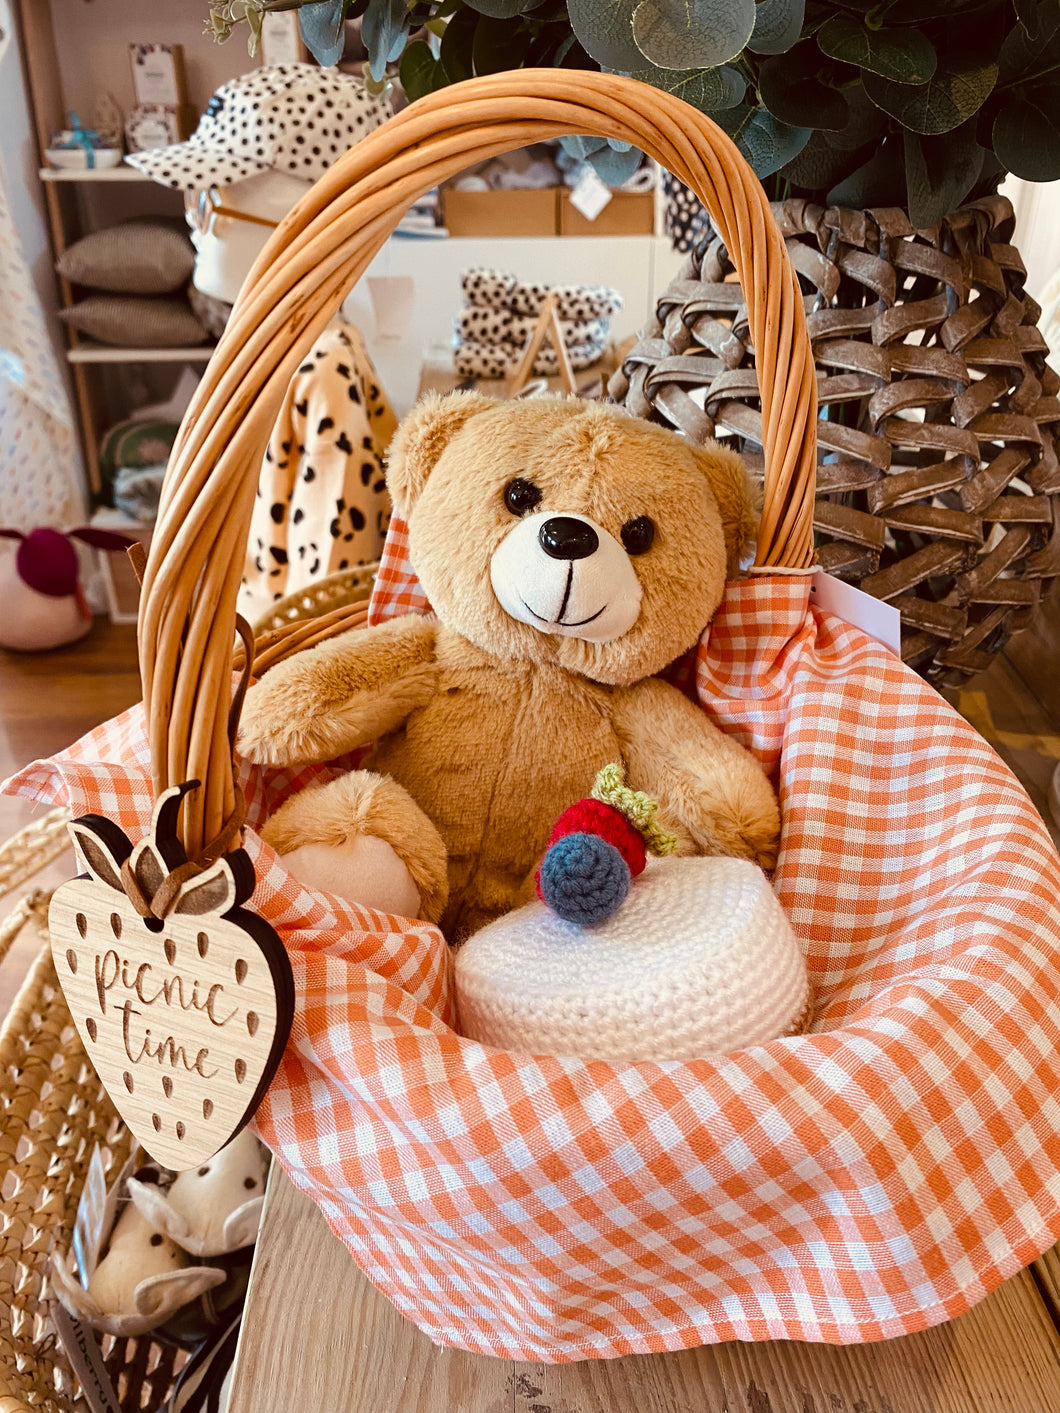 Teddy bears Picnic set